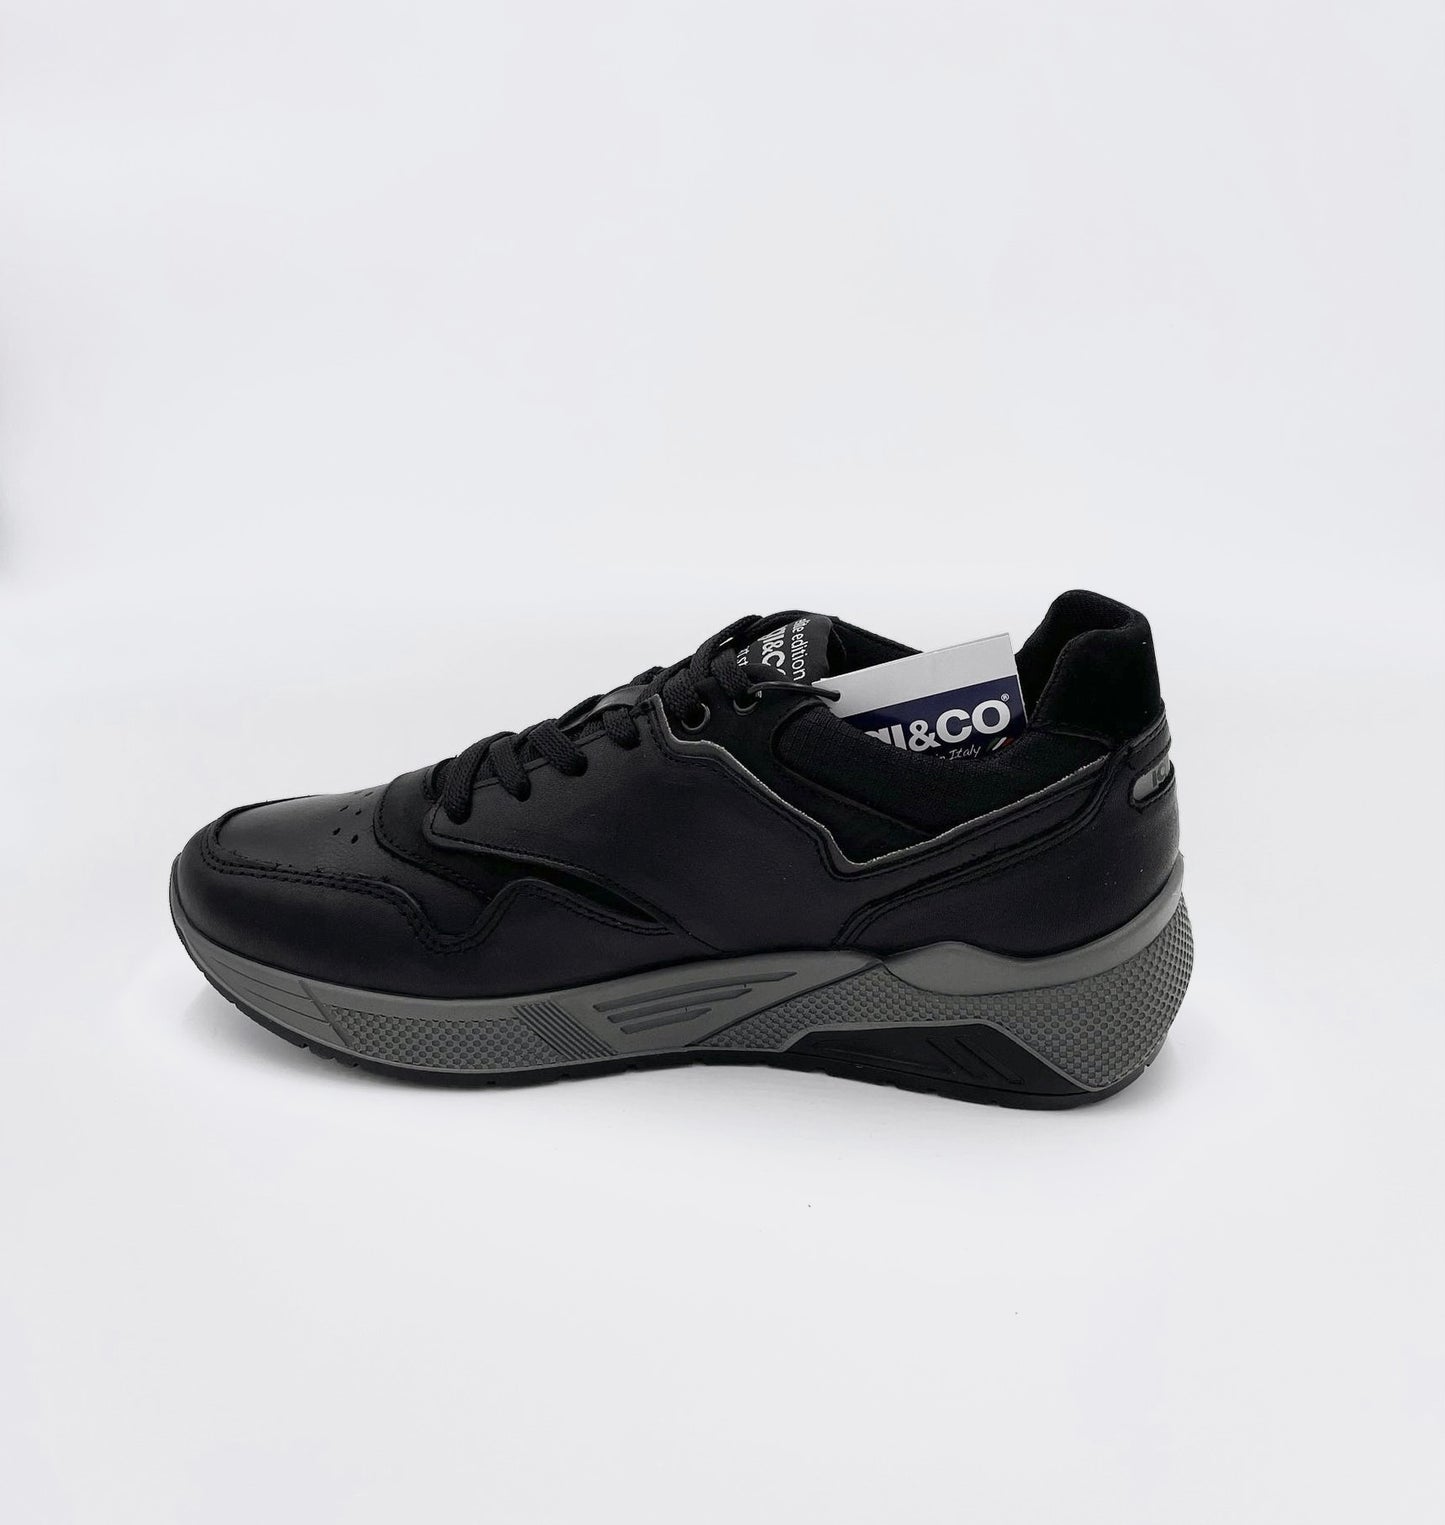 Igi&co sneaker nappa soft black - Igi&co